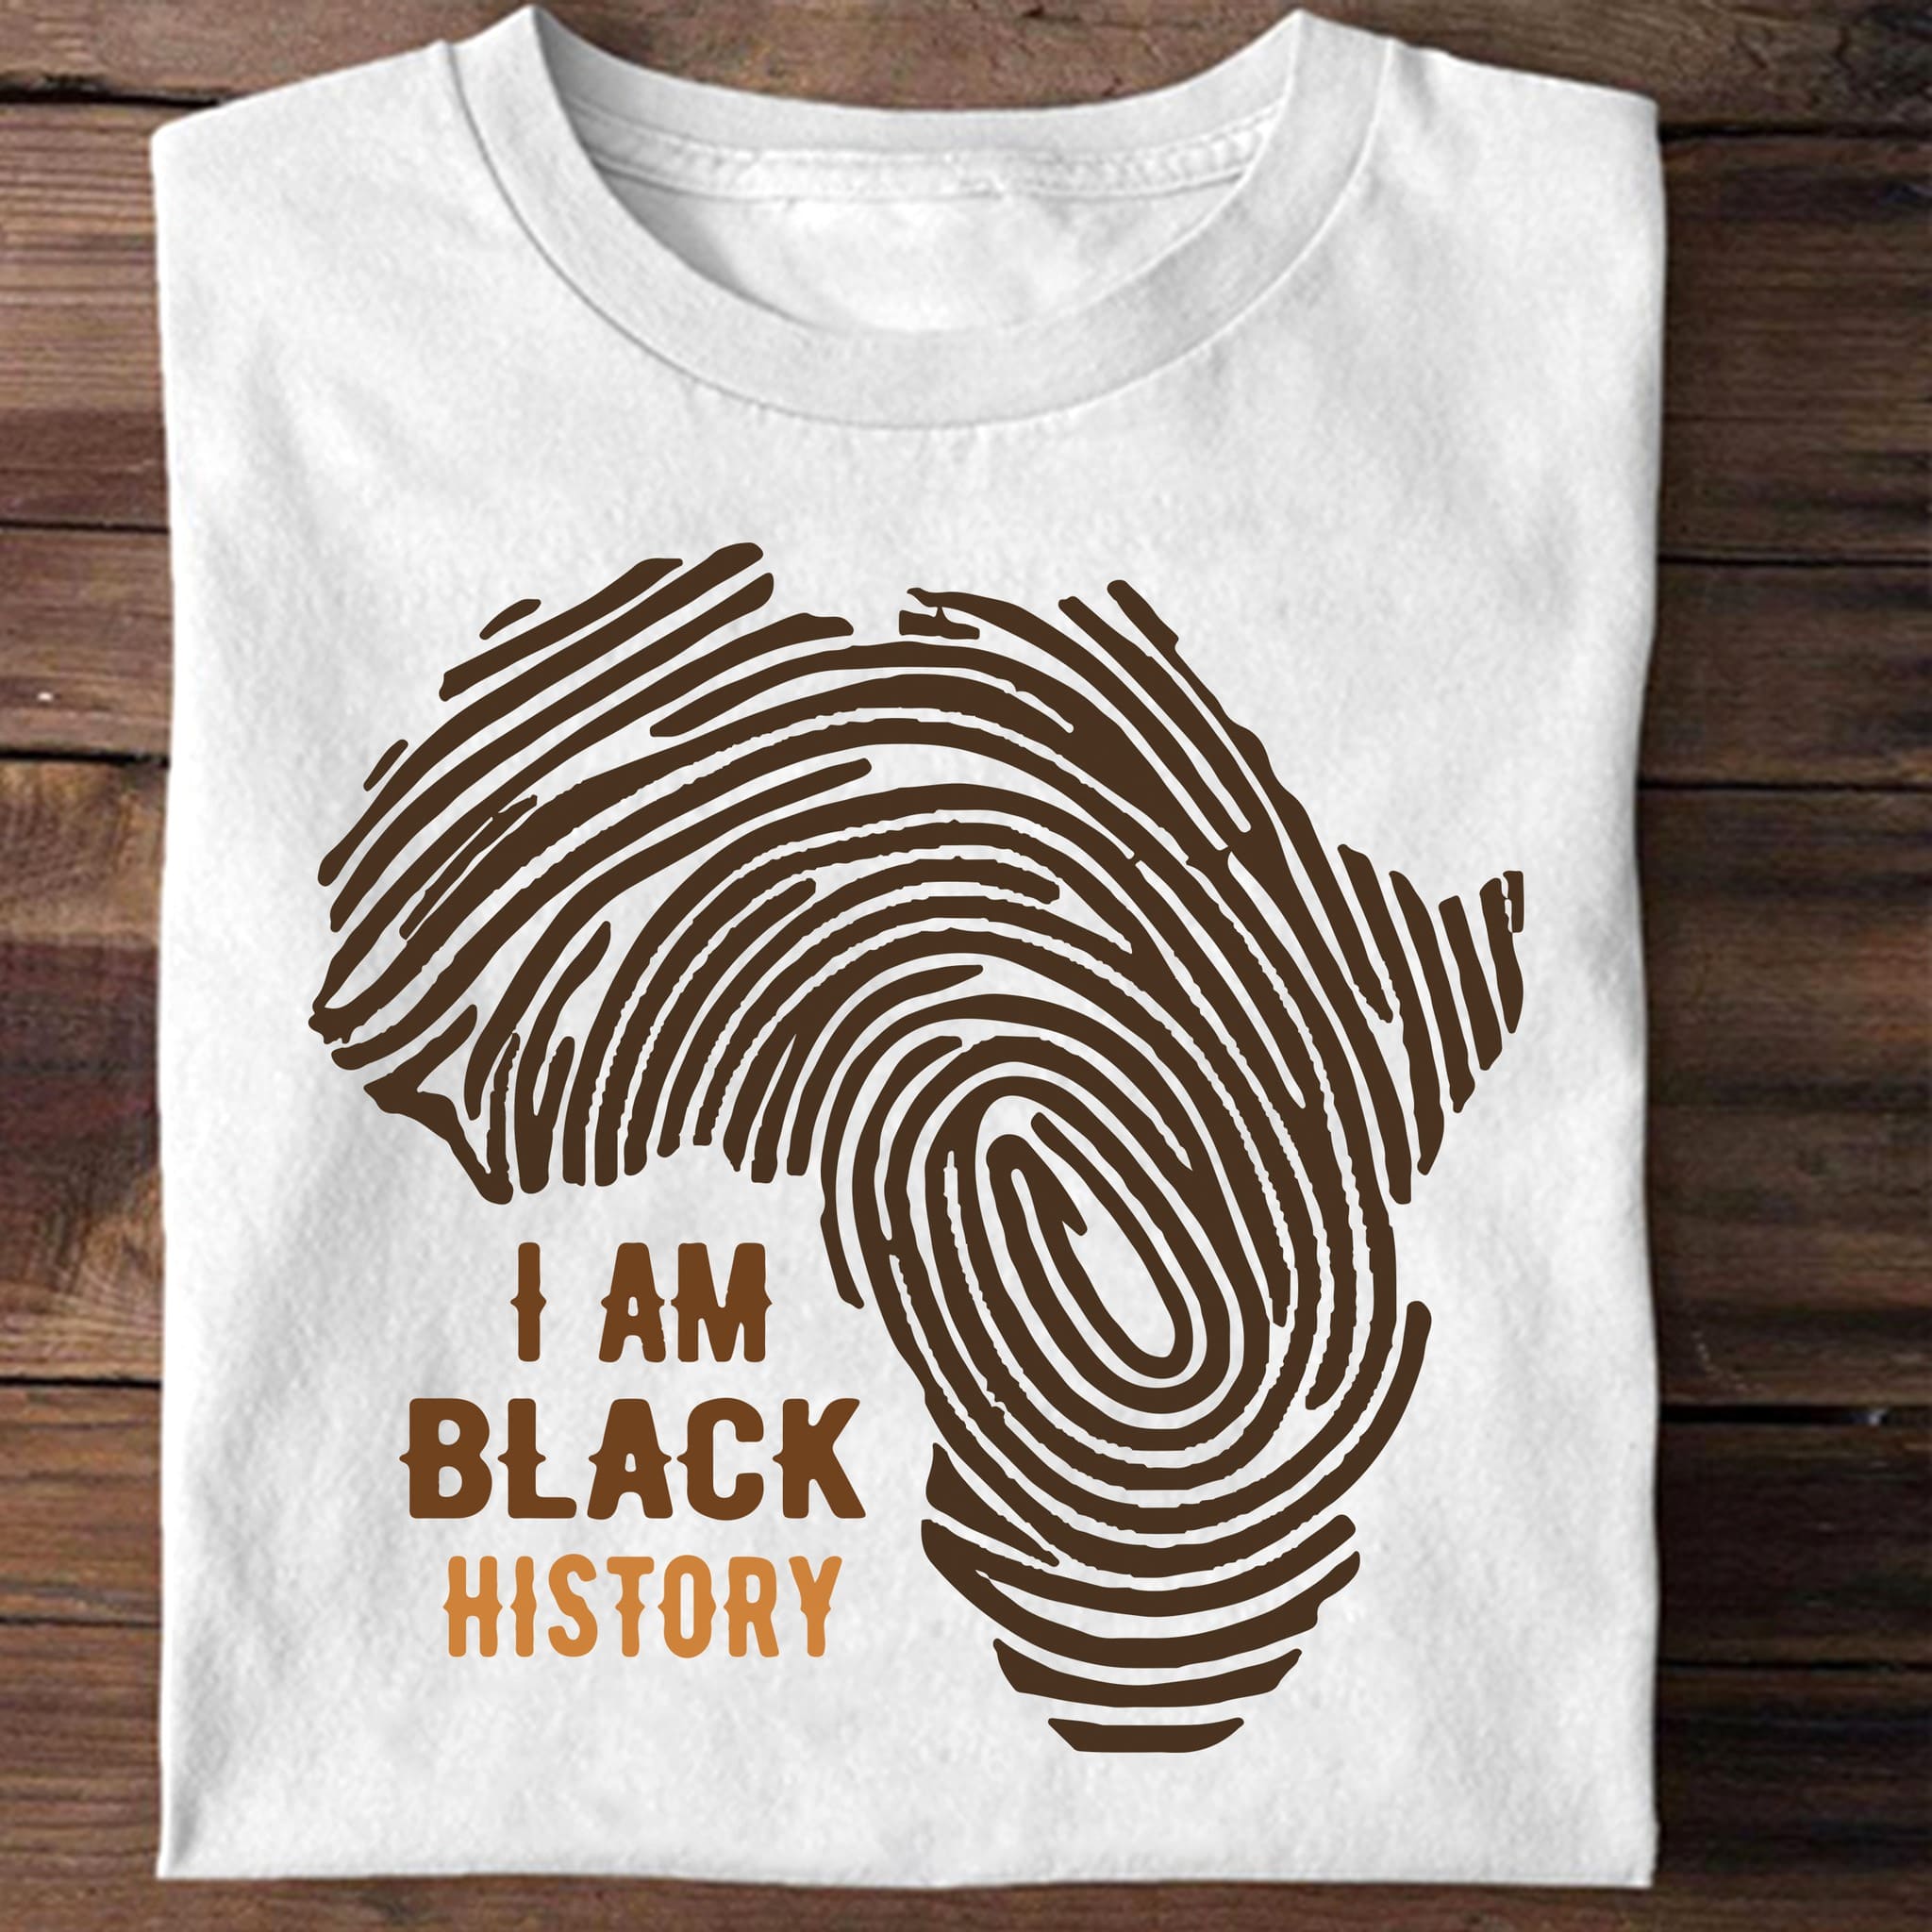 I am black history - Finger prints T-shirt, gift for black community